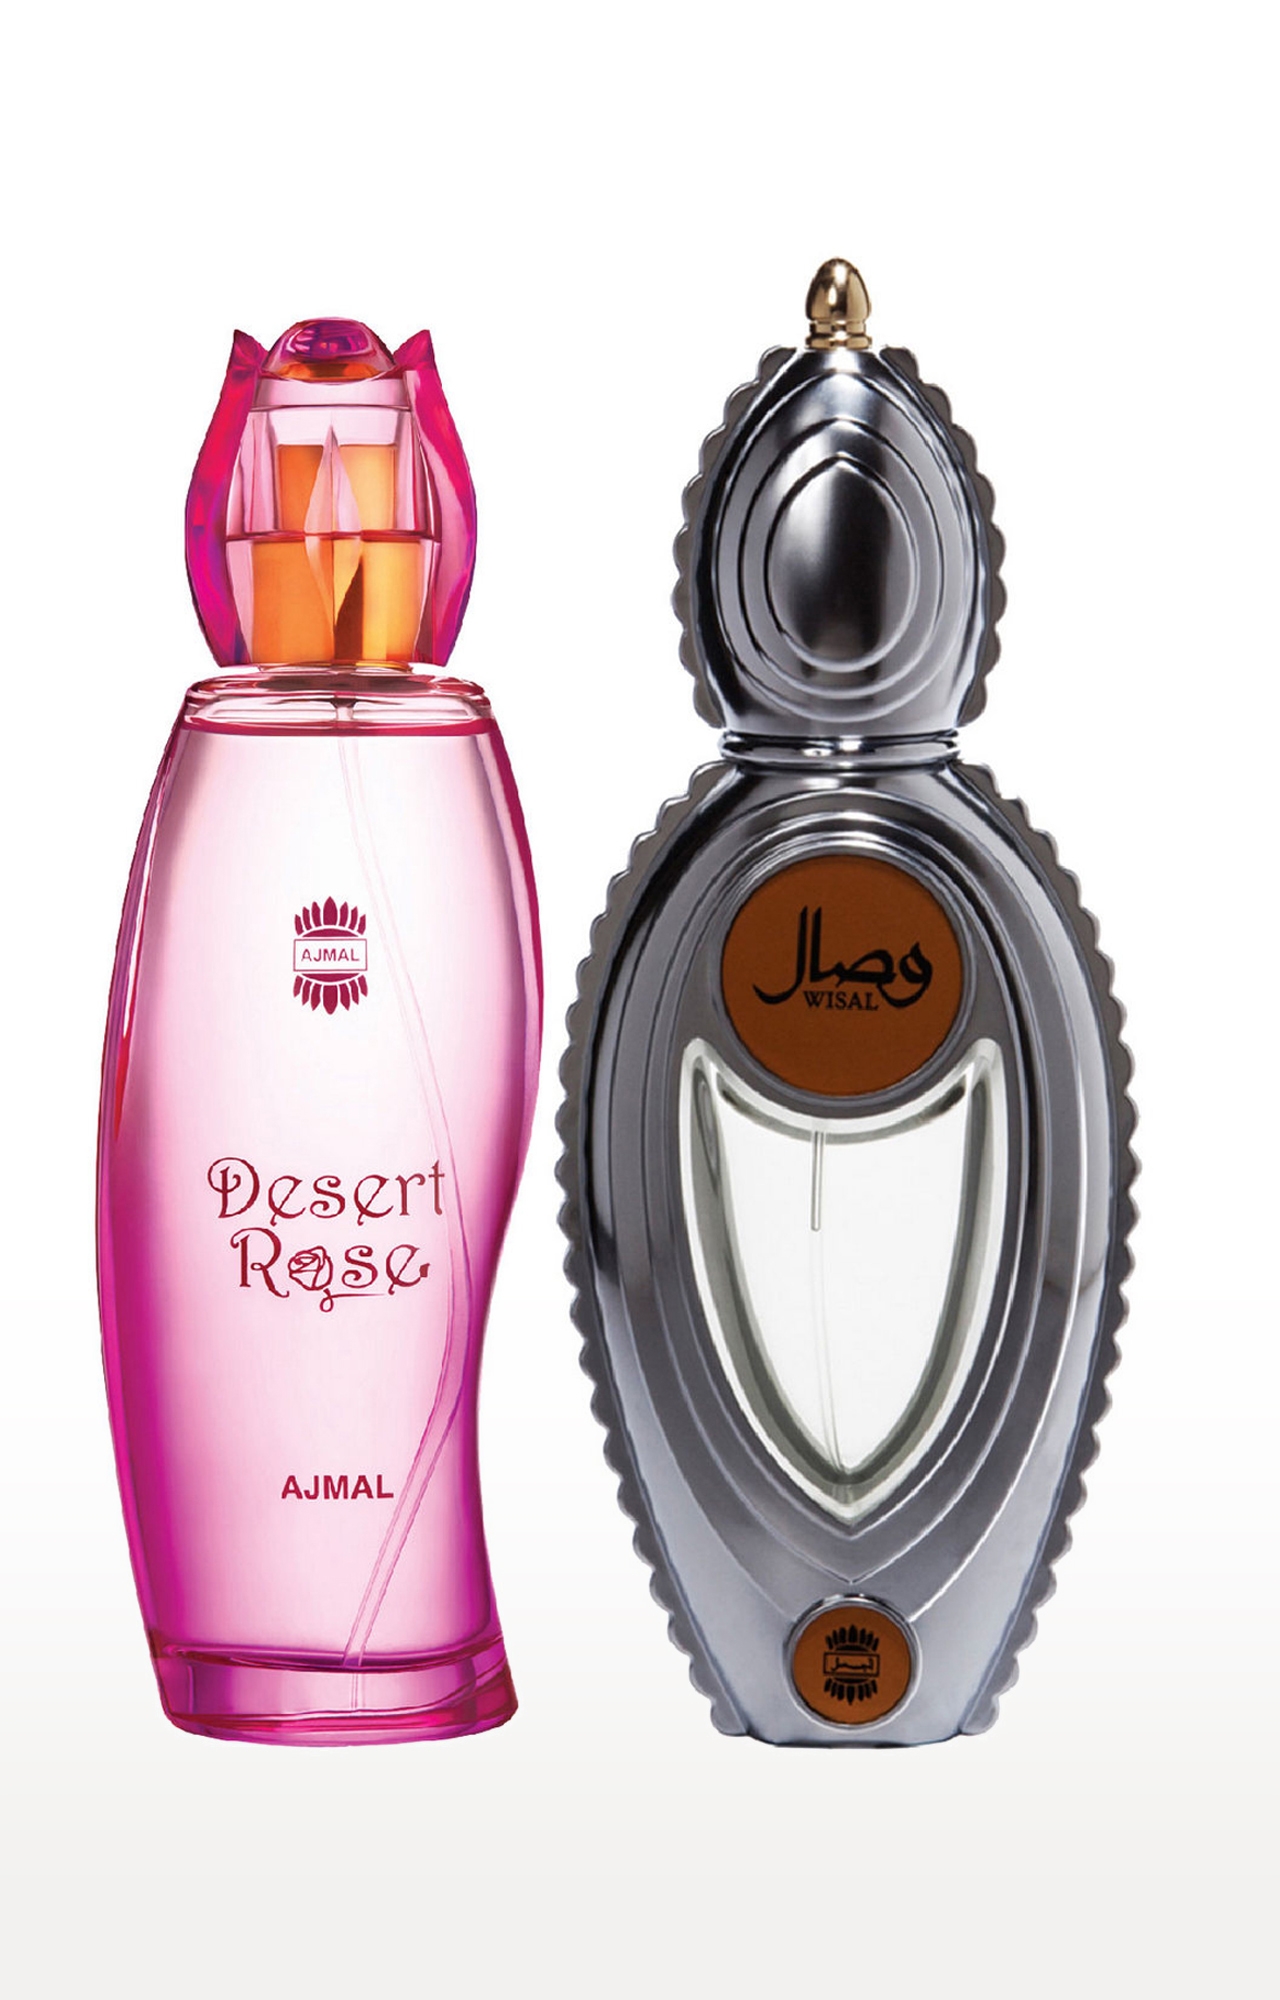 Ajmal | Ajmal Desert Rose EDP Floral Oriental Perfume 100ml for Women and Wisal EDP Floral Musky Perfume 50ml for Women + 2 Parfum Testers FREE